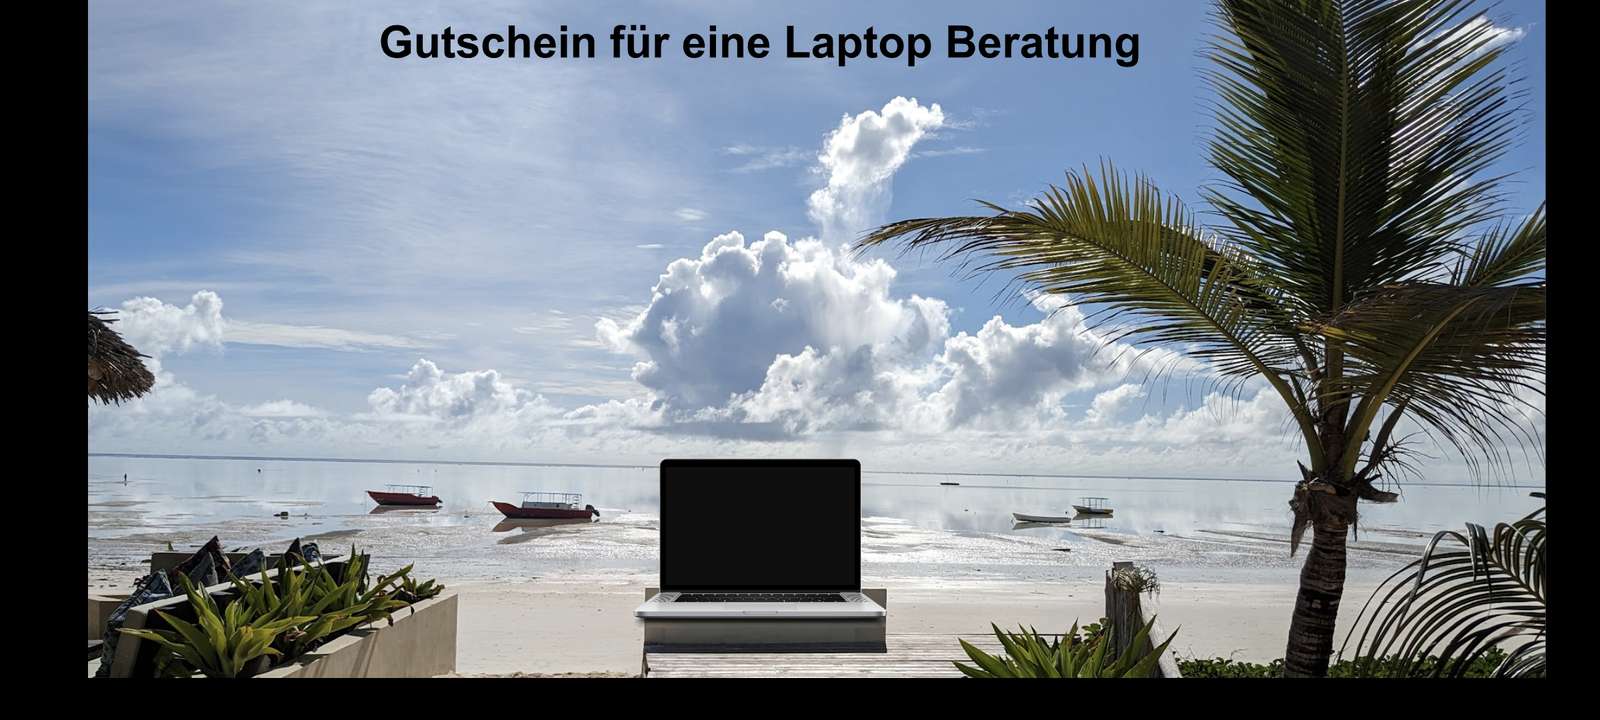 Laptop na plaży puzzle online ze zdjęcia